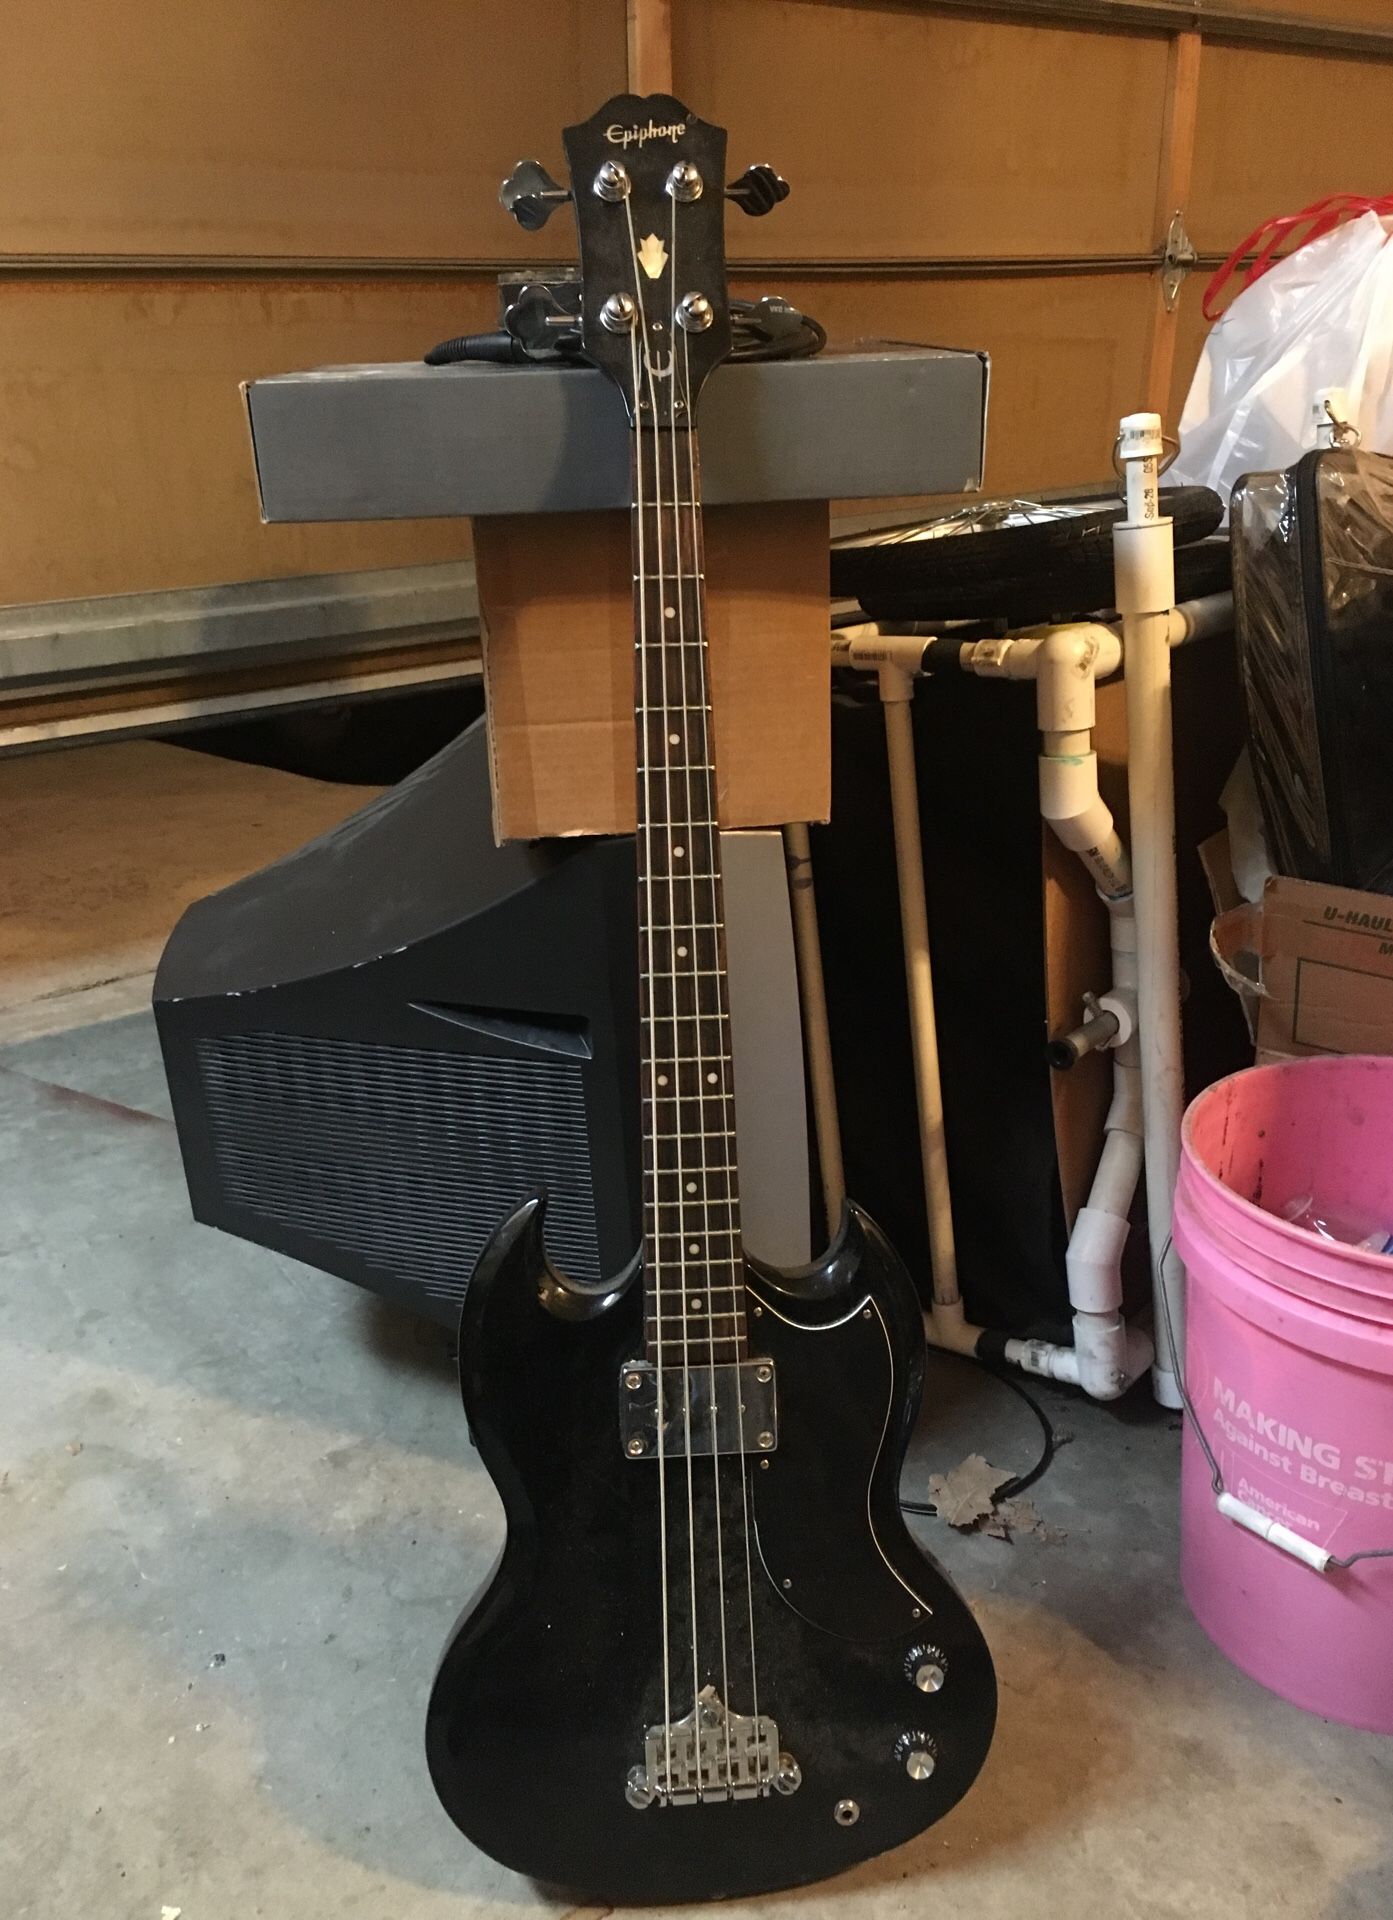 Epiphone 4 string bass guitar